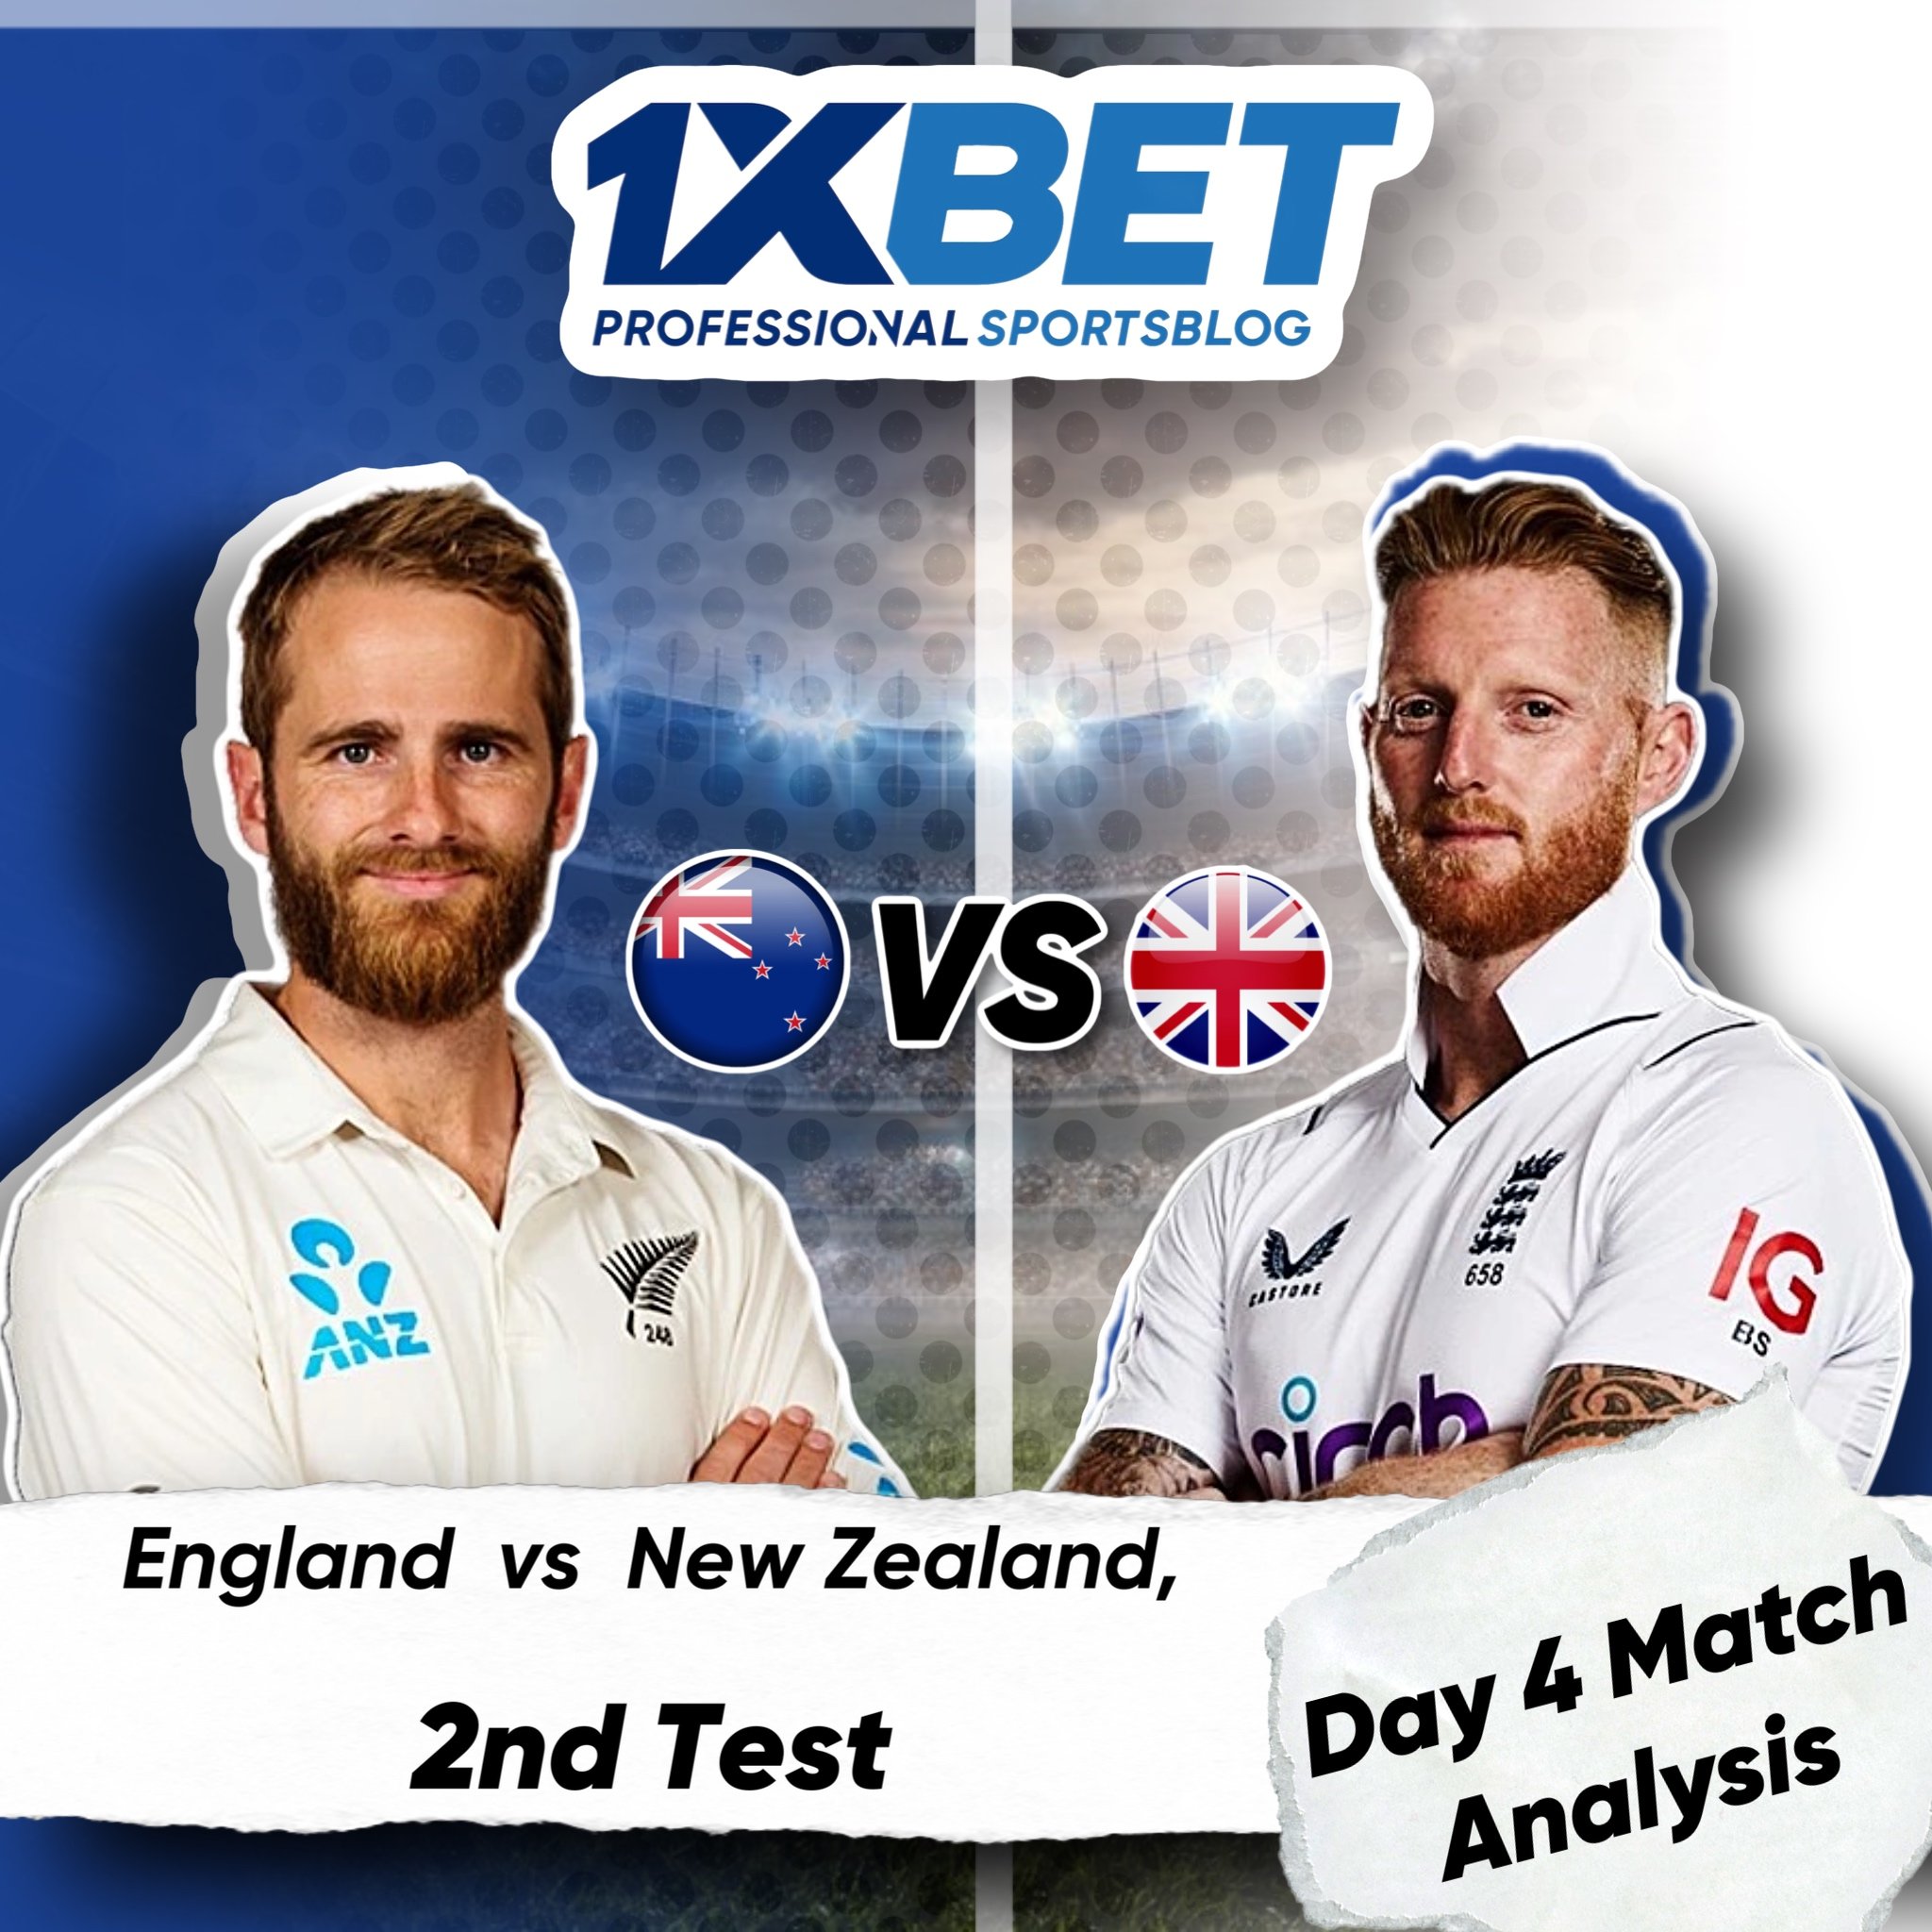 England vs New Zealand, 2nd Test, Day 4 Match Analysis